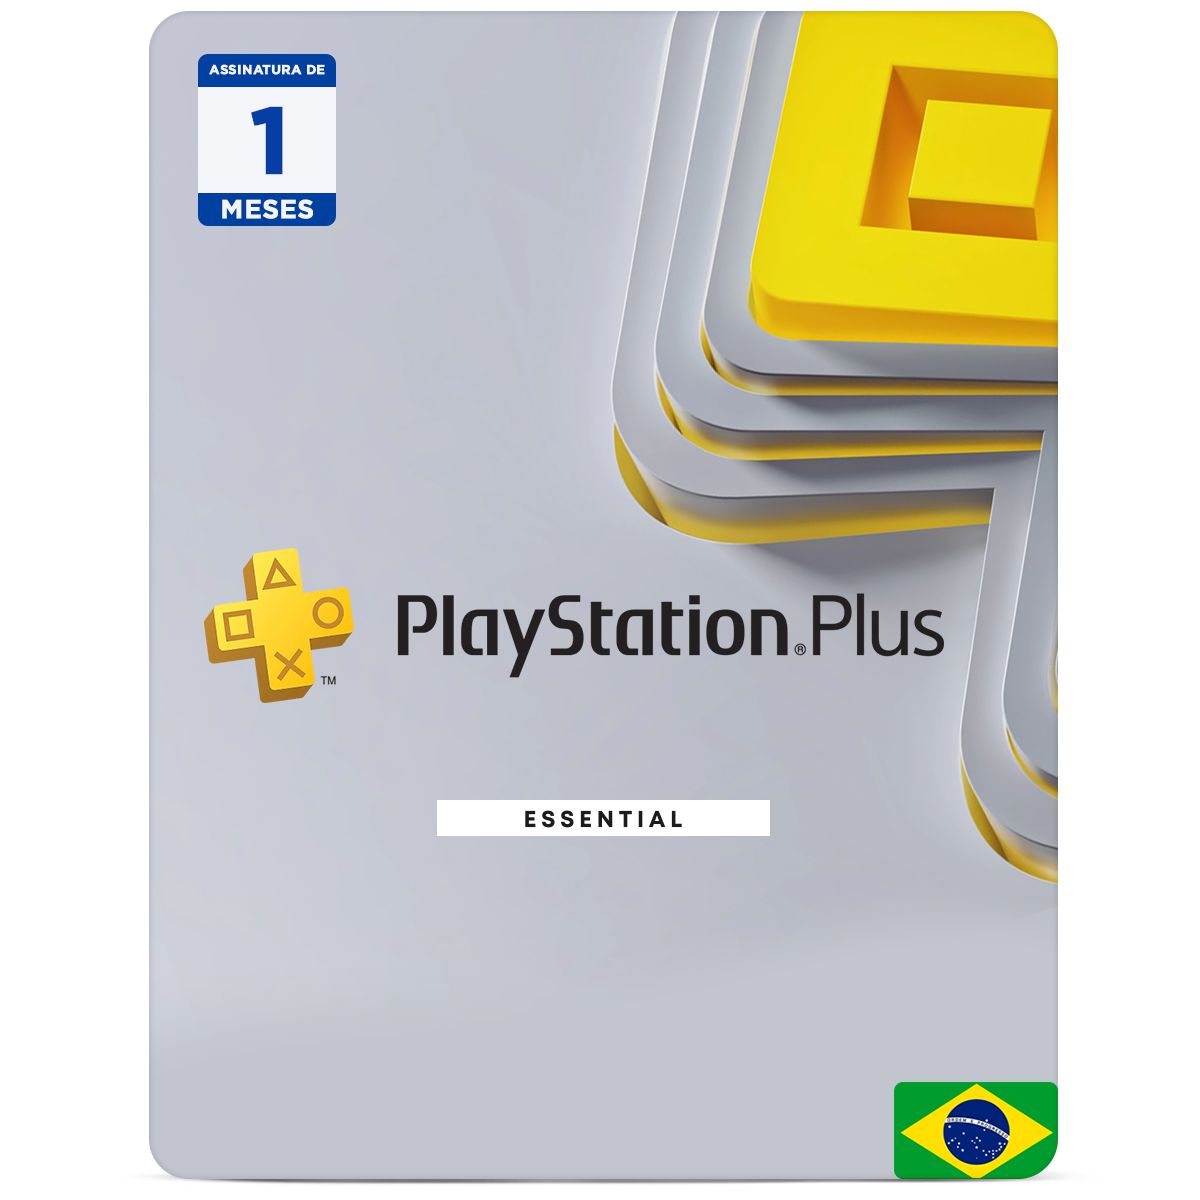 PlayStation Plus Essencial: Assinatura De 1 Mês on PS5 PS4 — price history,  screenshots, discounts • Brasil